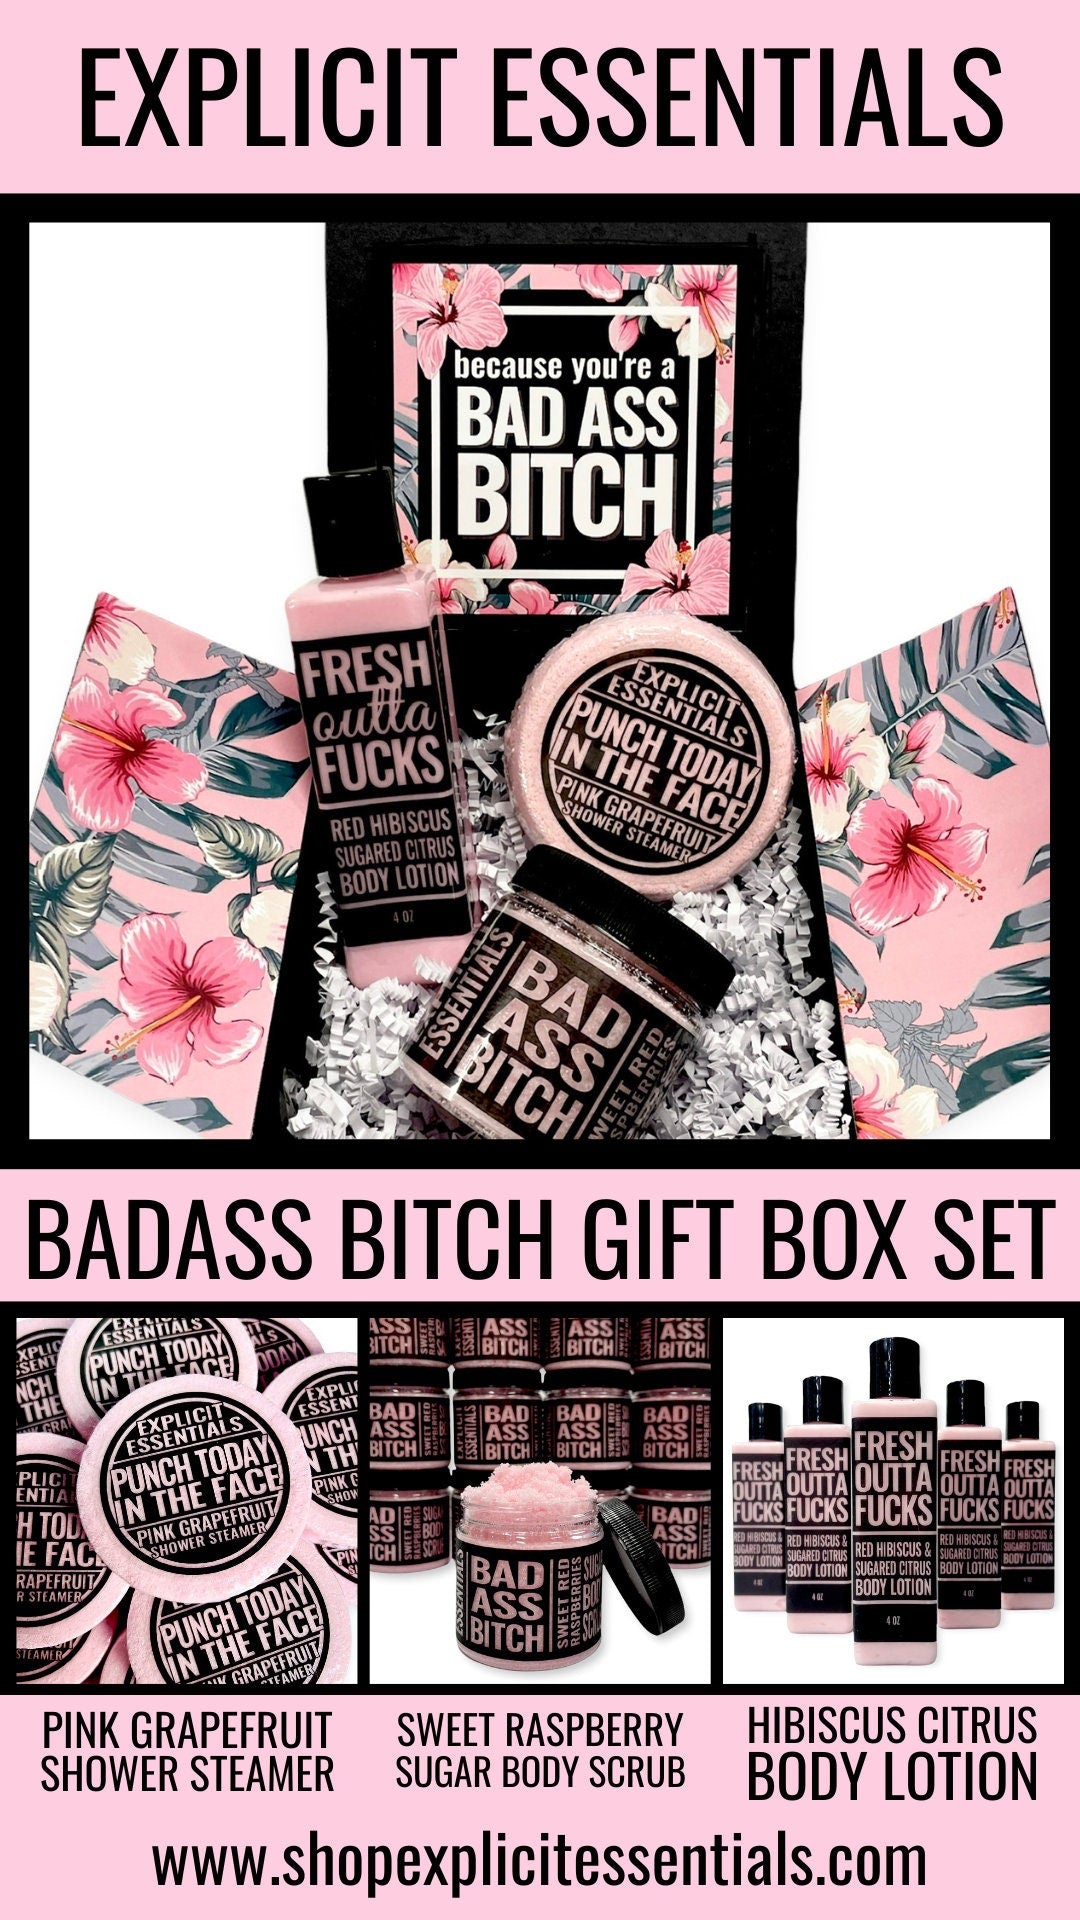 Bad Ass Bitch Gift Box